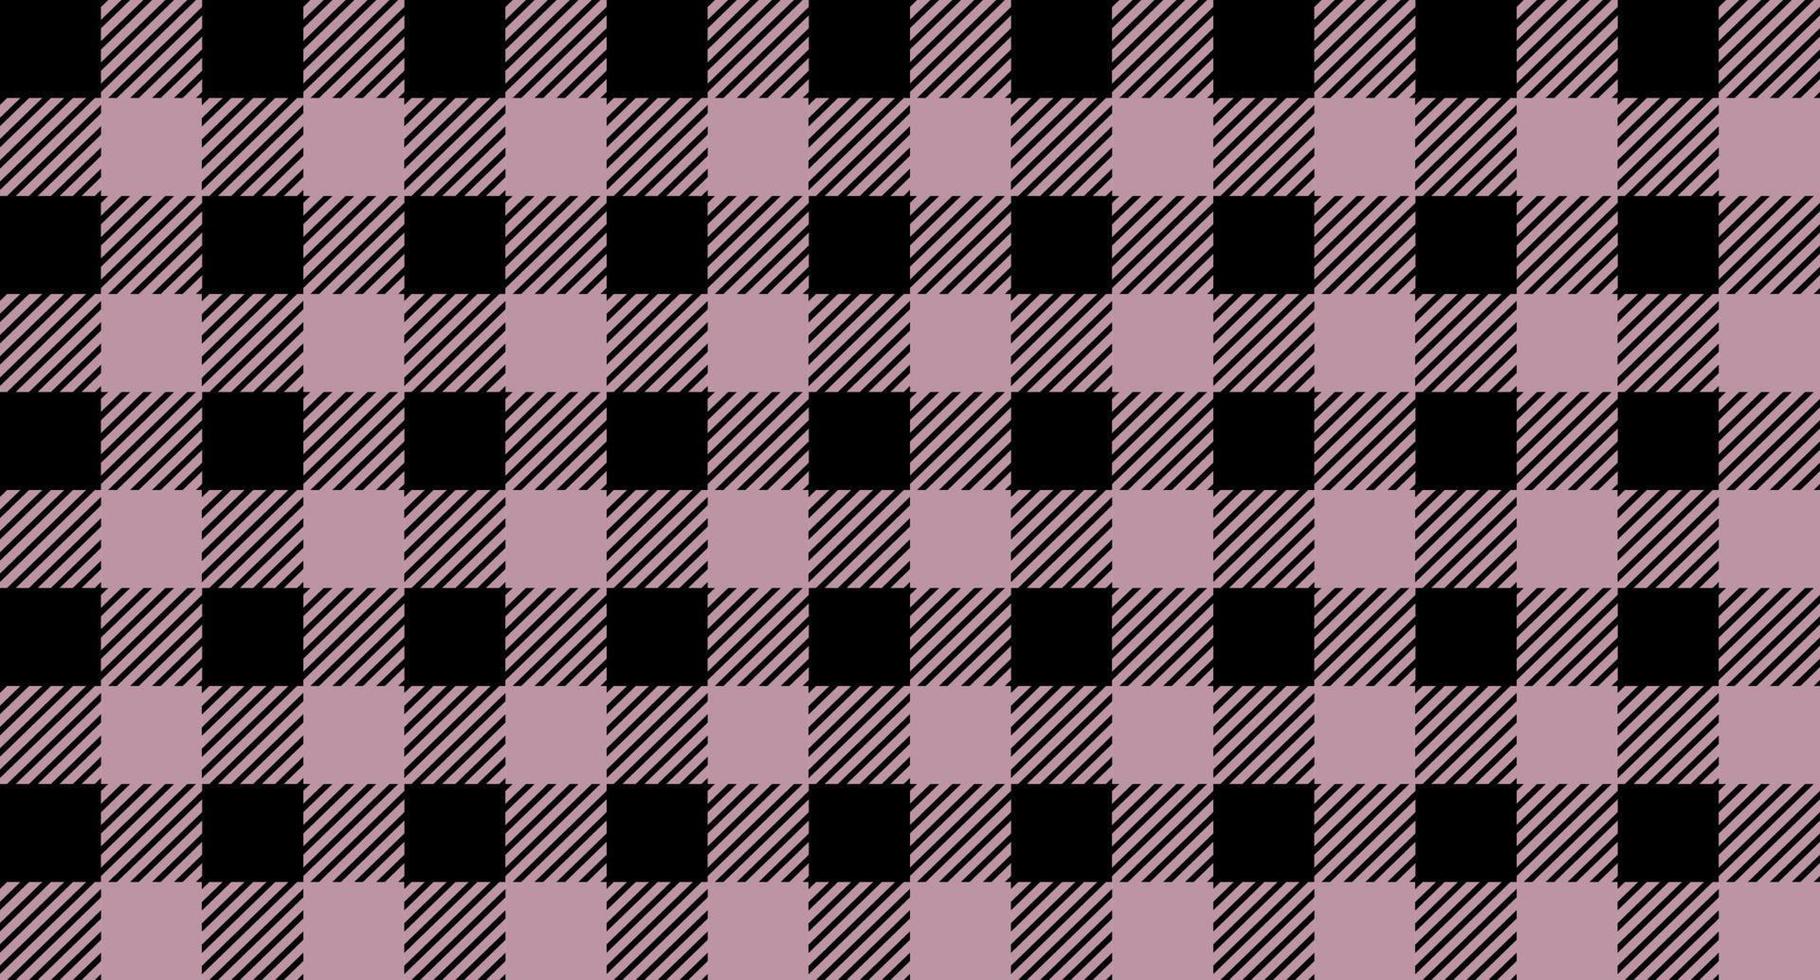 fundo de vetor padrão xadrez rosa e preto, textura de tecido tartan 9576590  Vetor no Vecteezy